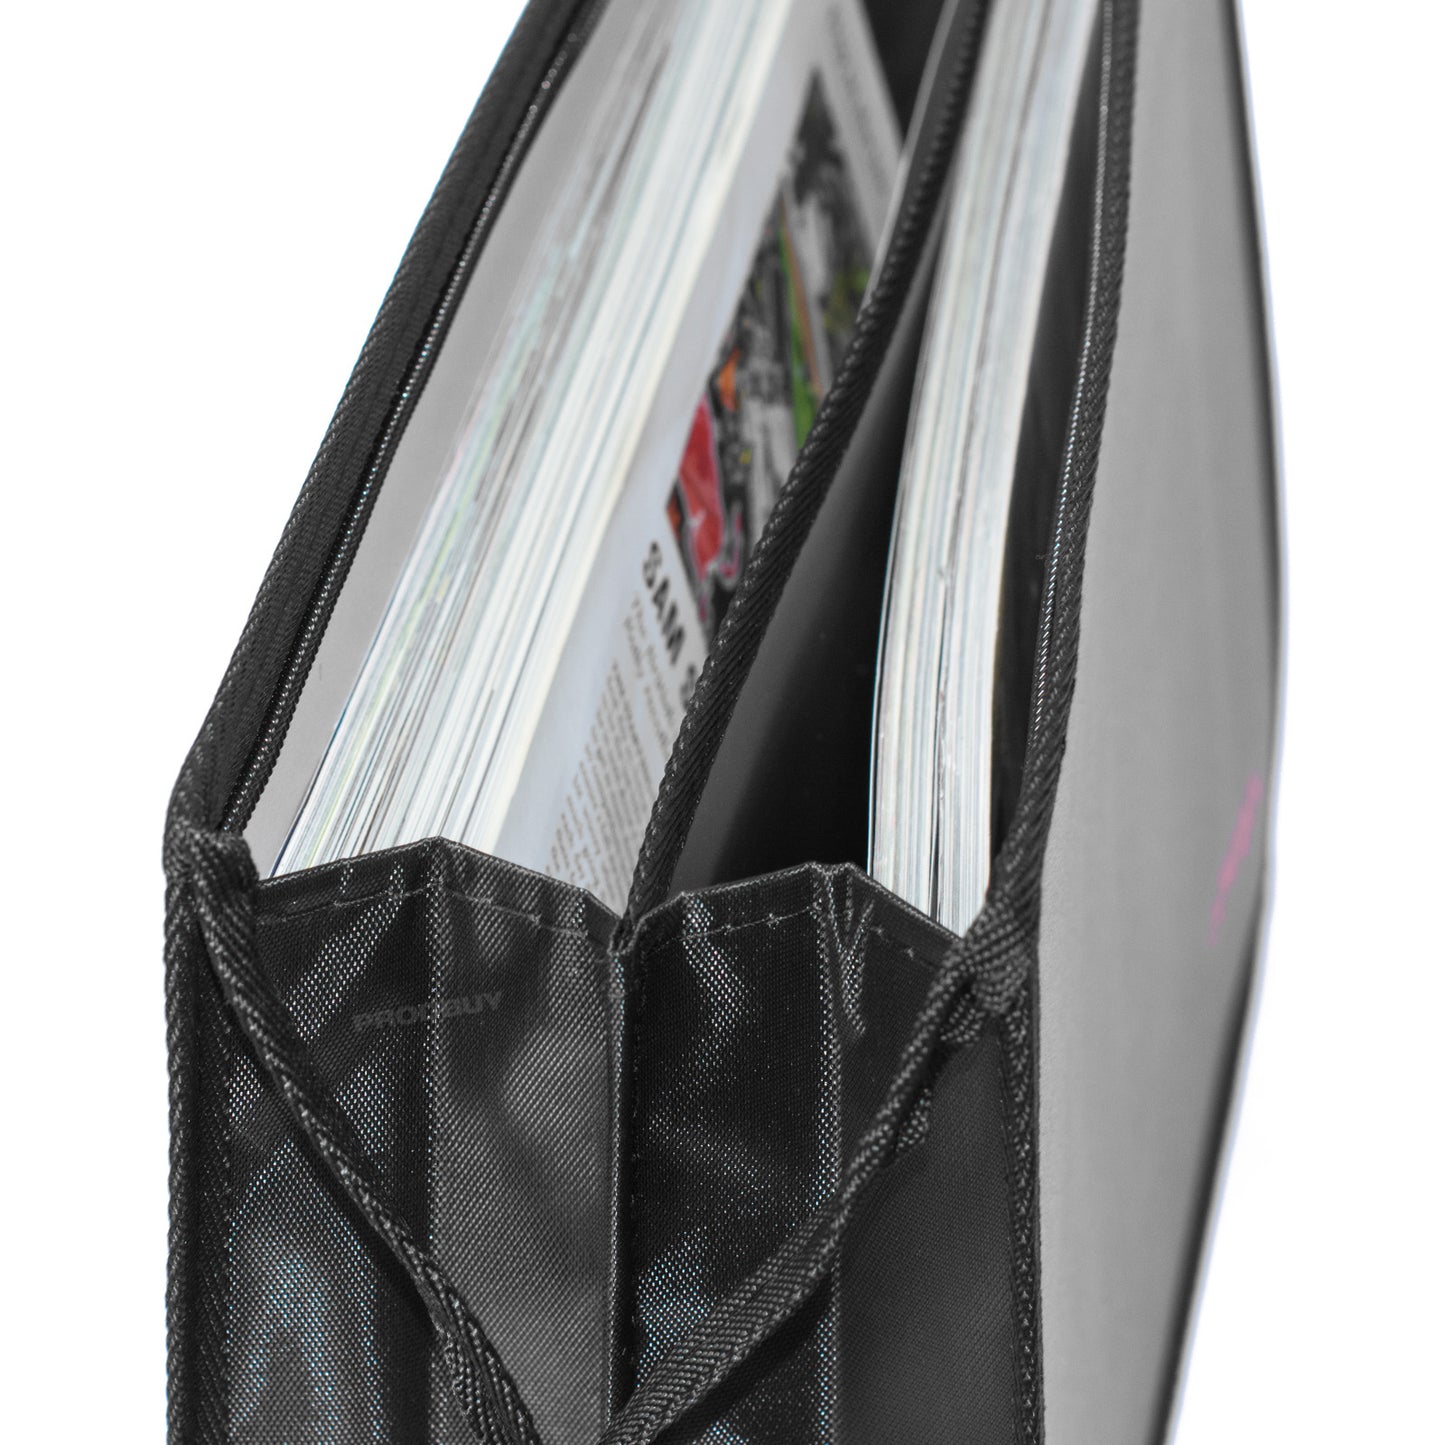 Set of 5 Black A4 Zipped Expanding Storage File Folders